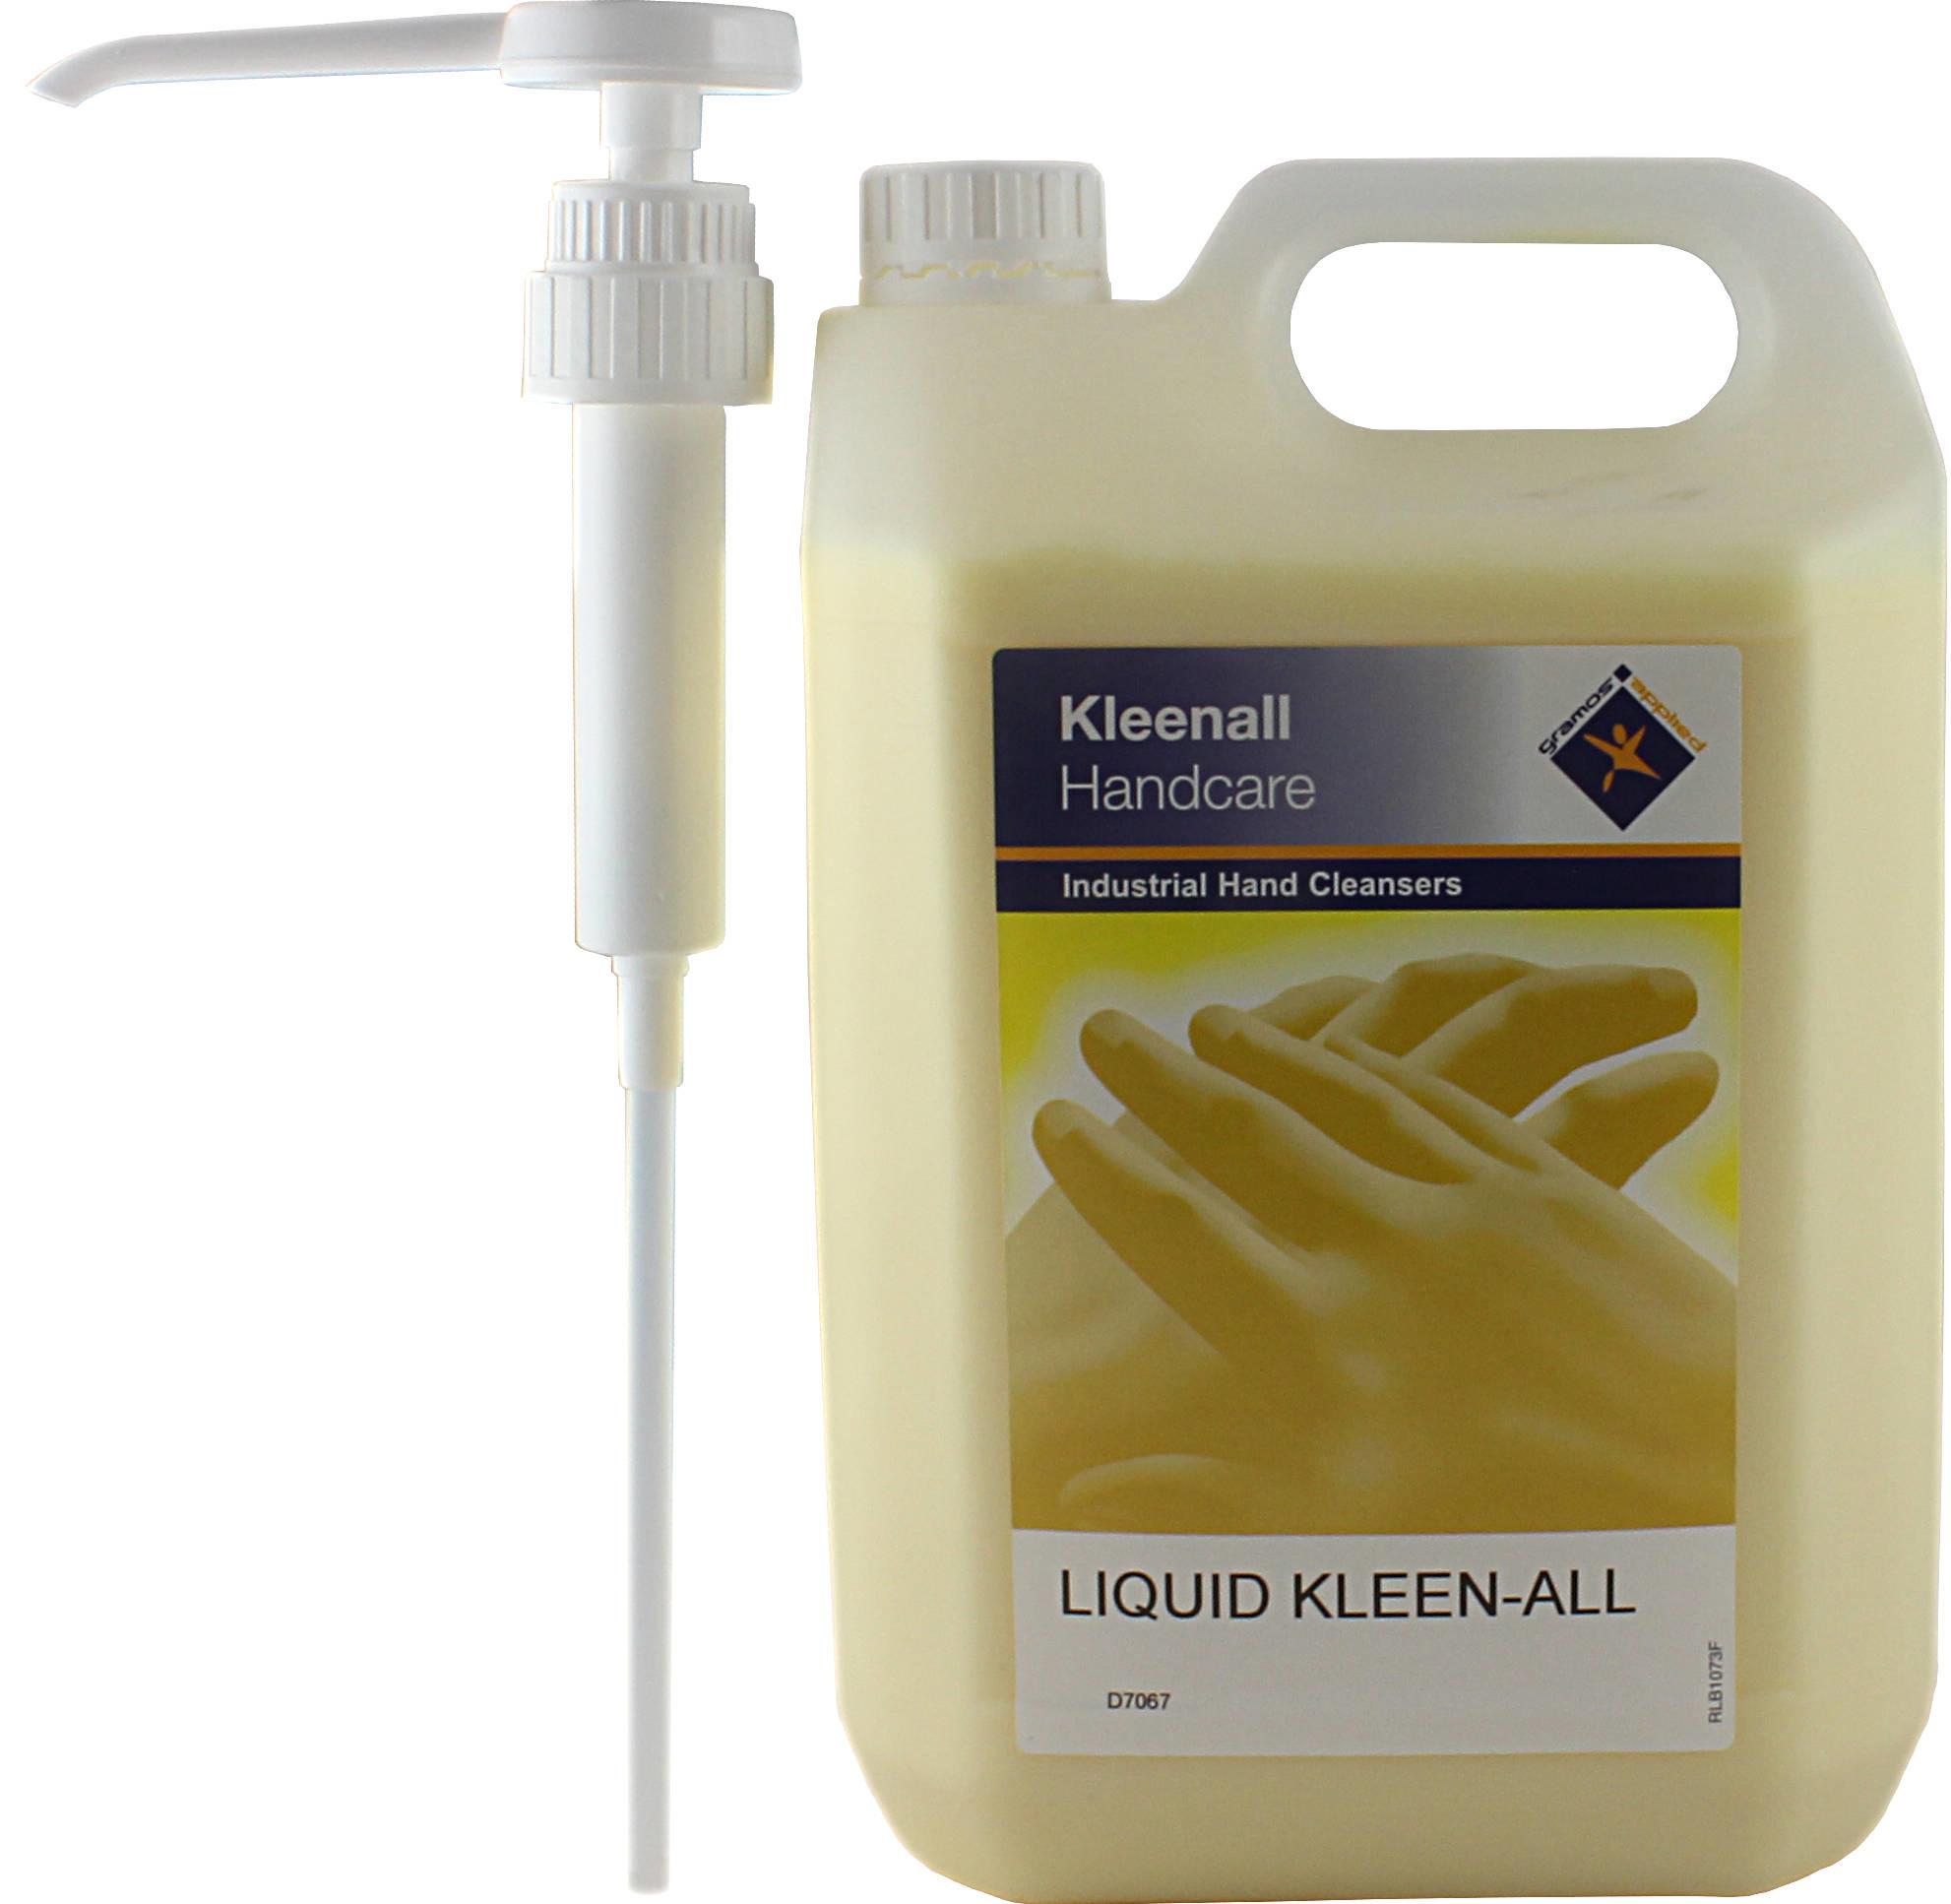 Kleenall Liquid